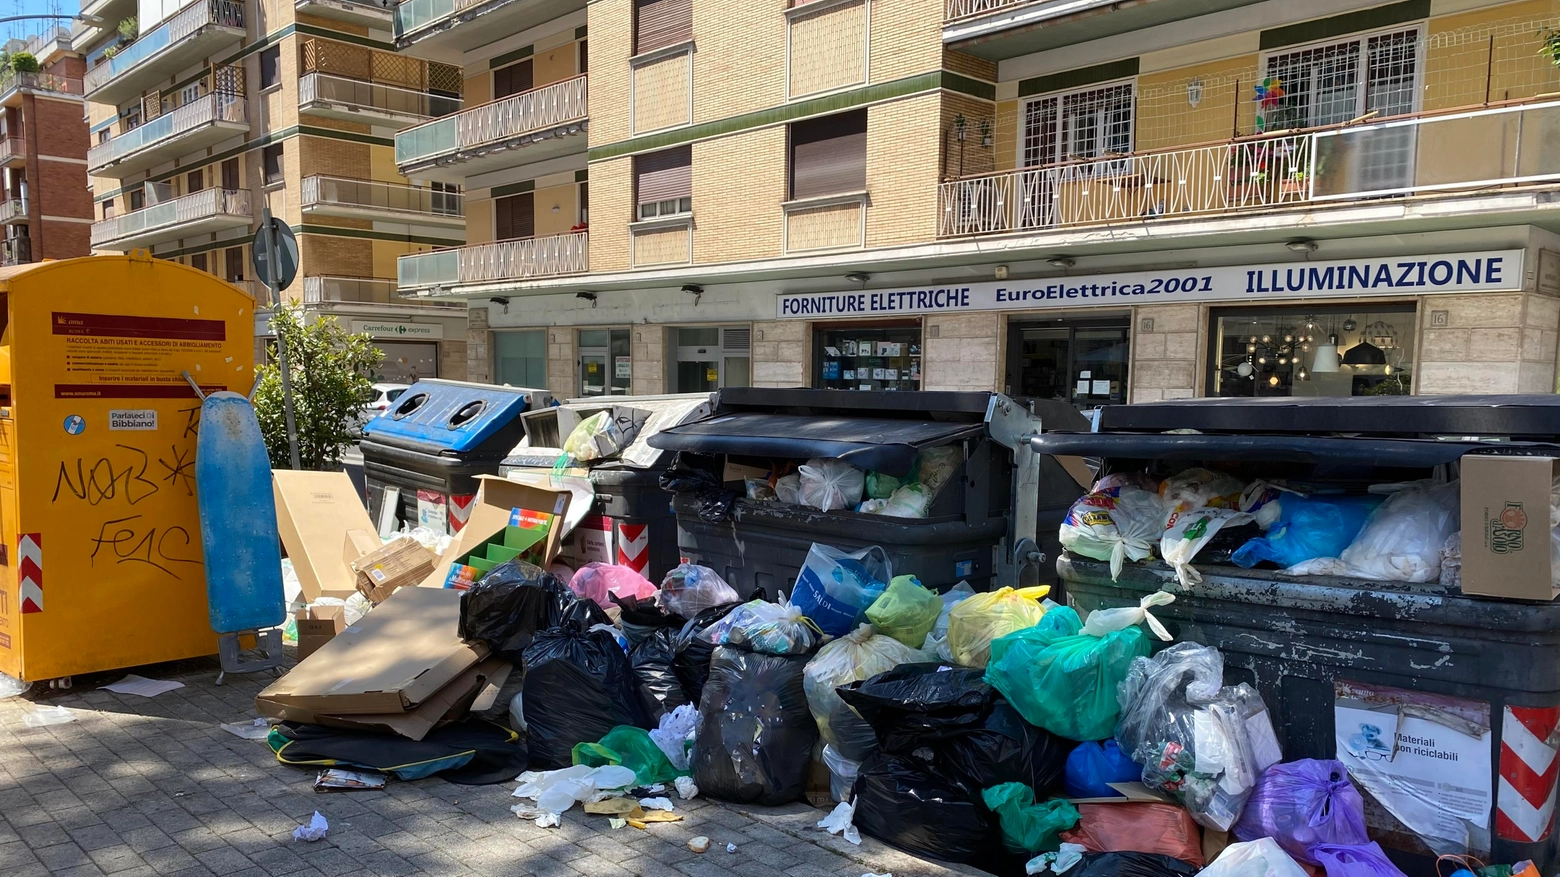 Strada di Roma invasa dai rifiuti